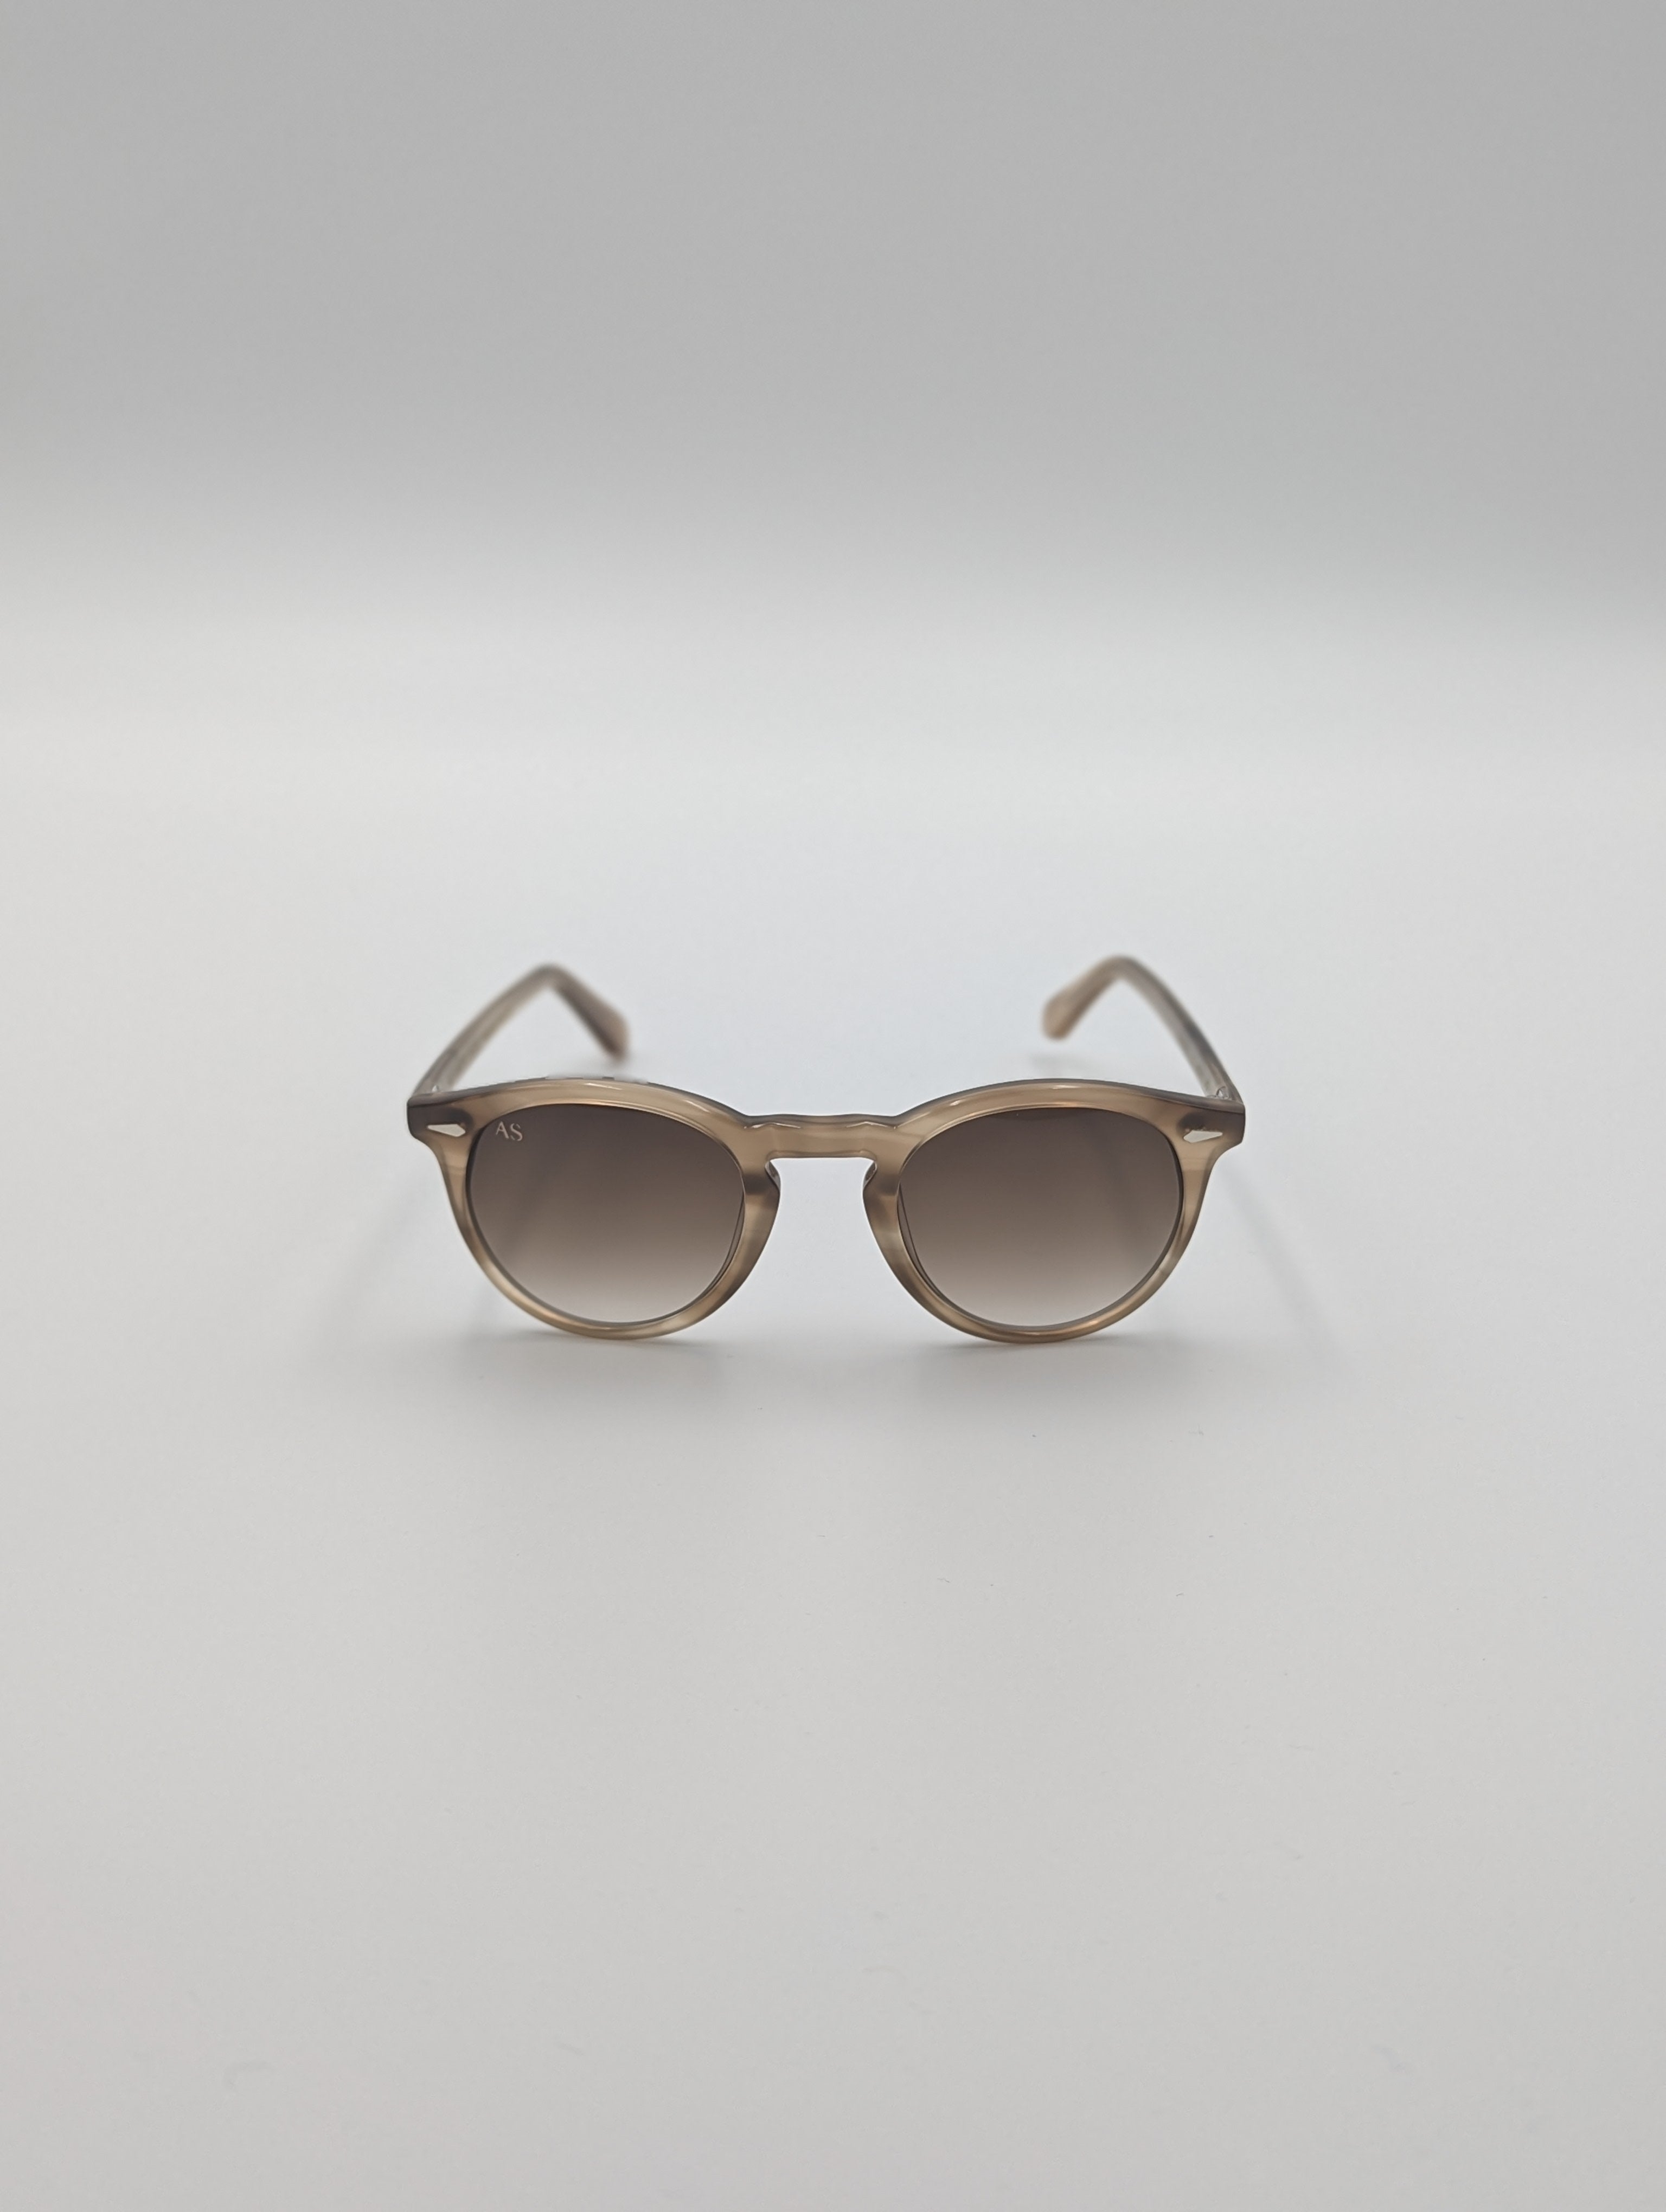 Sunglasses Iconic - Crema